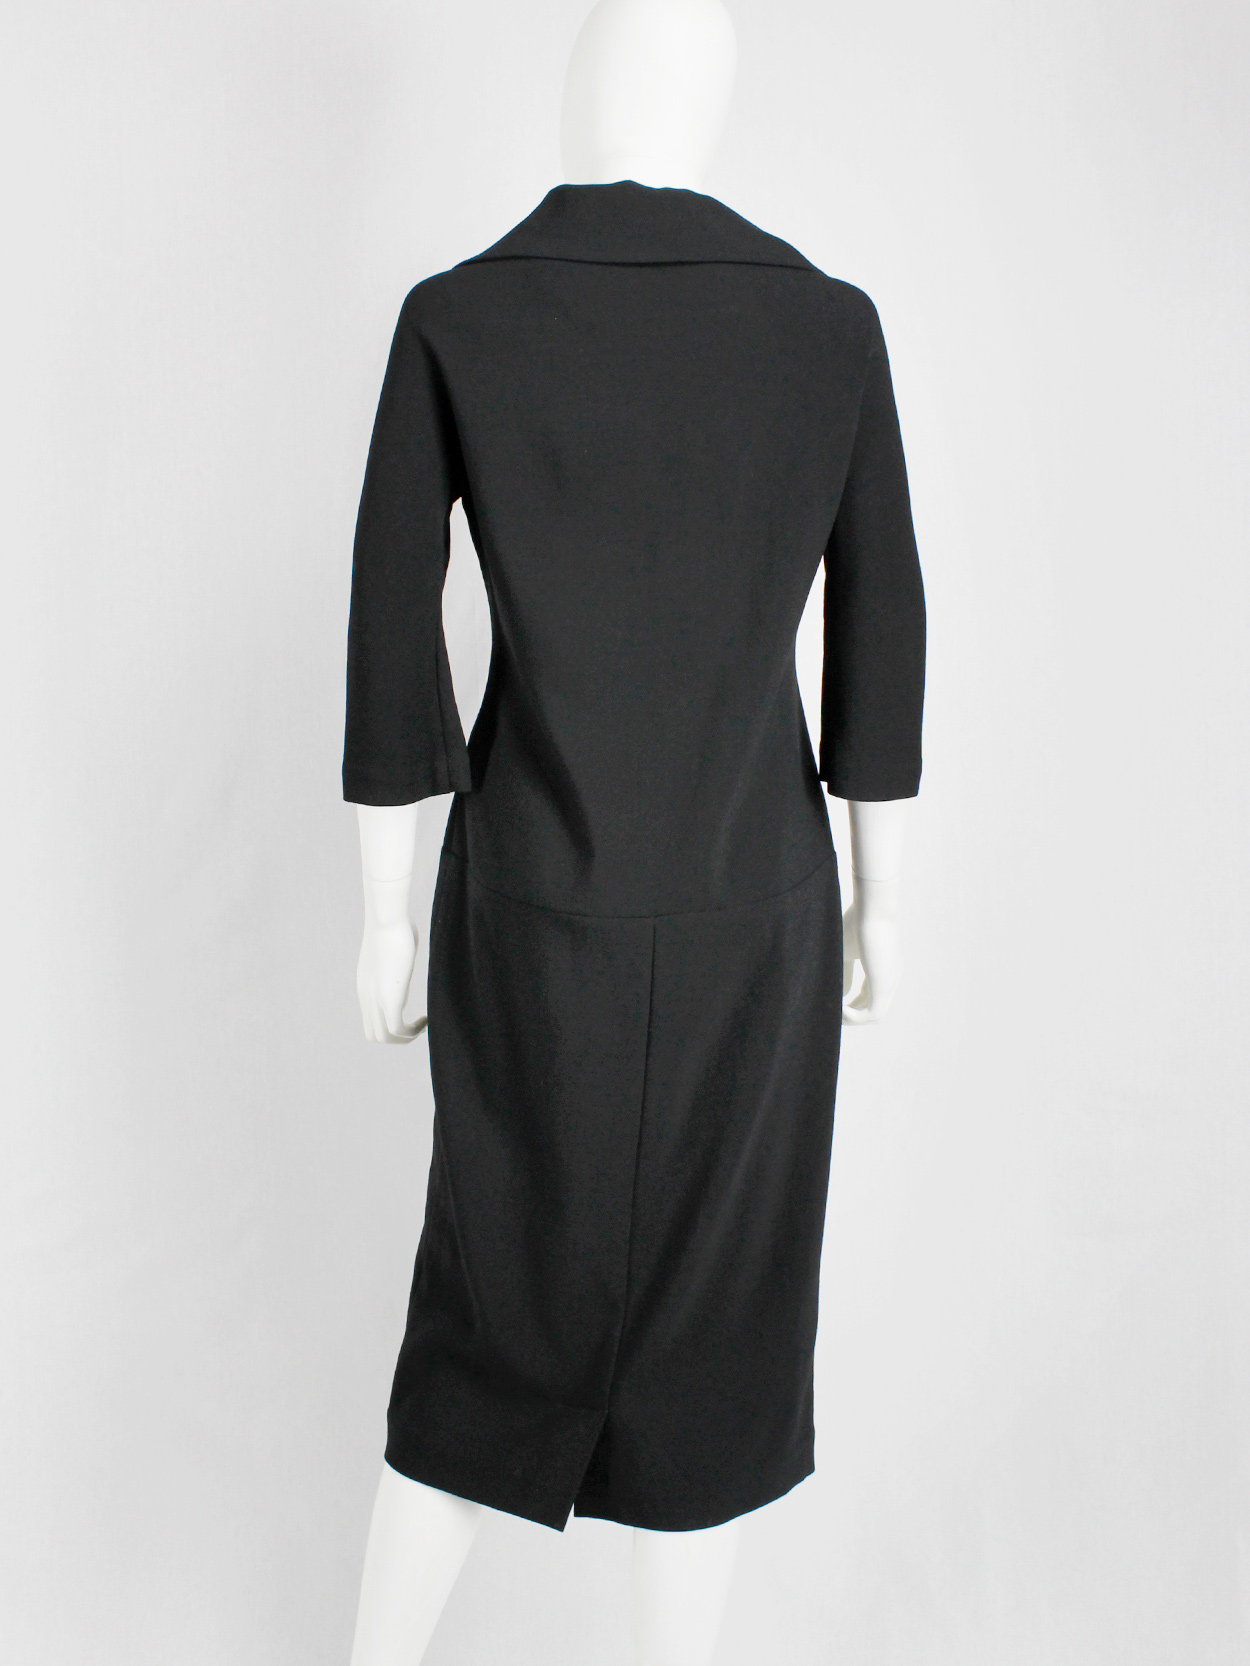 Yohji Yamamoto black twinset-inspired dress with fabric covered buttons ...